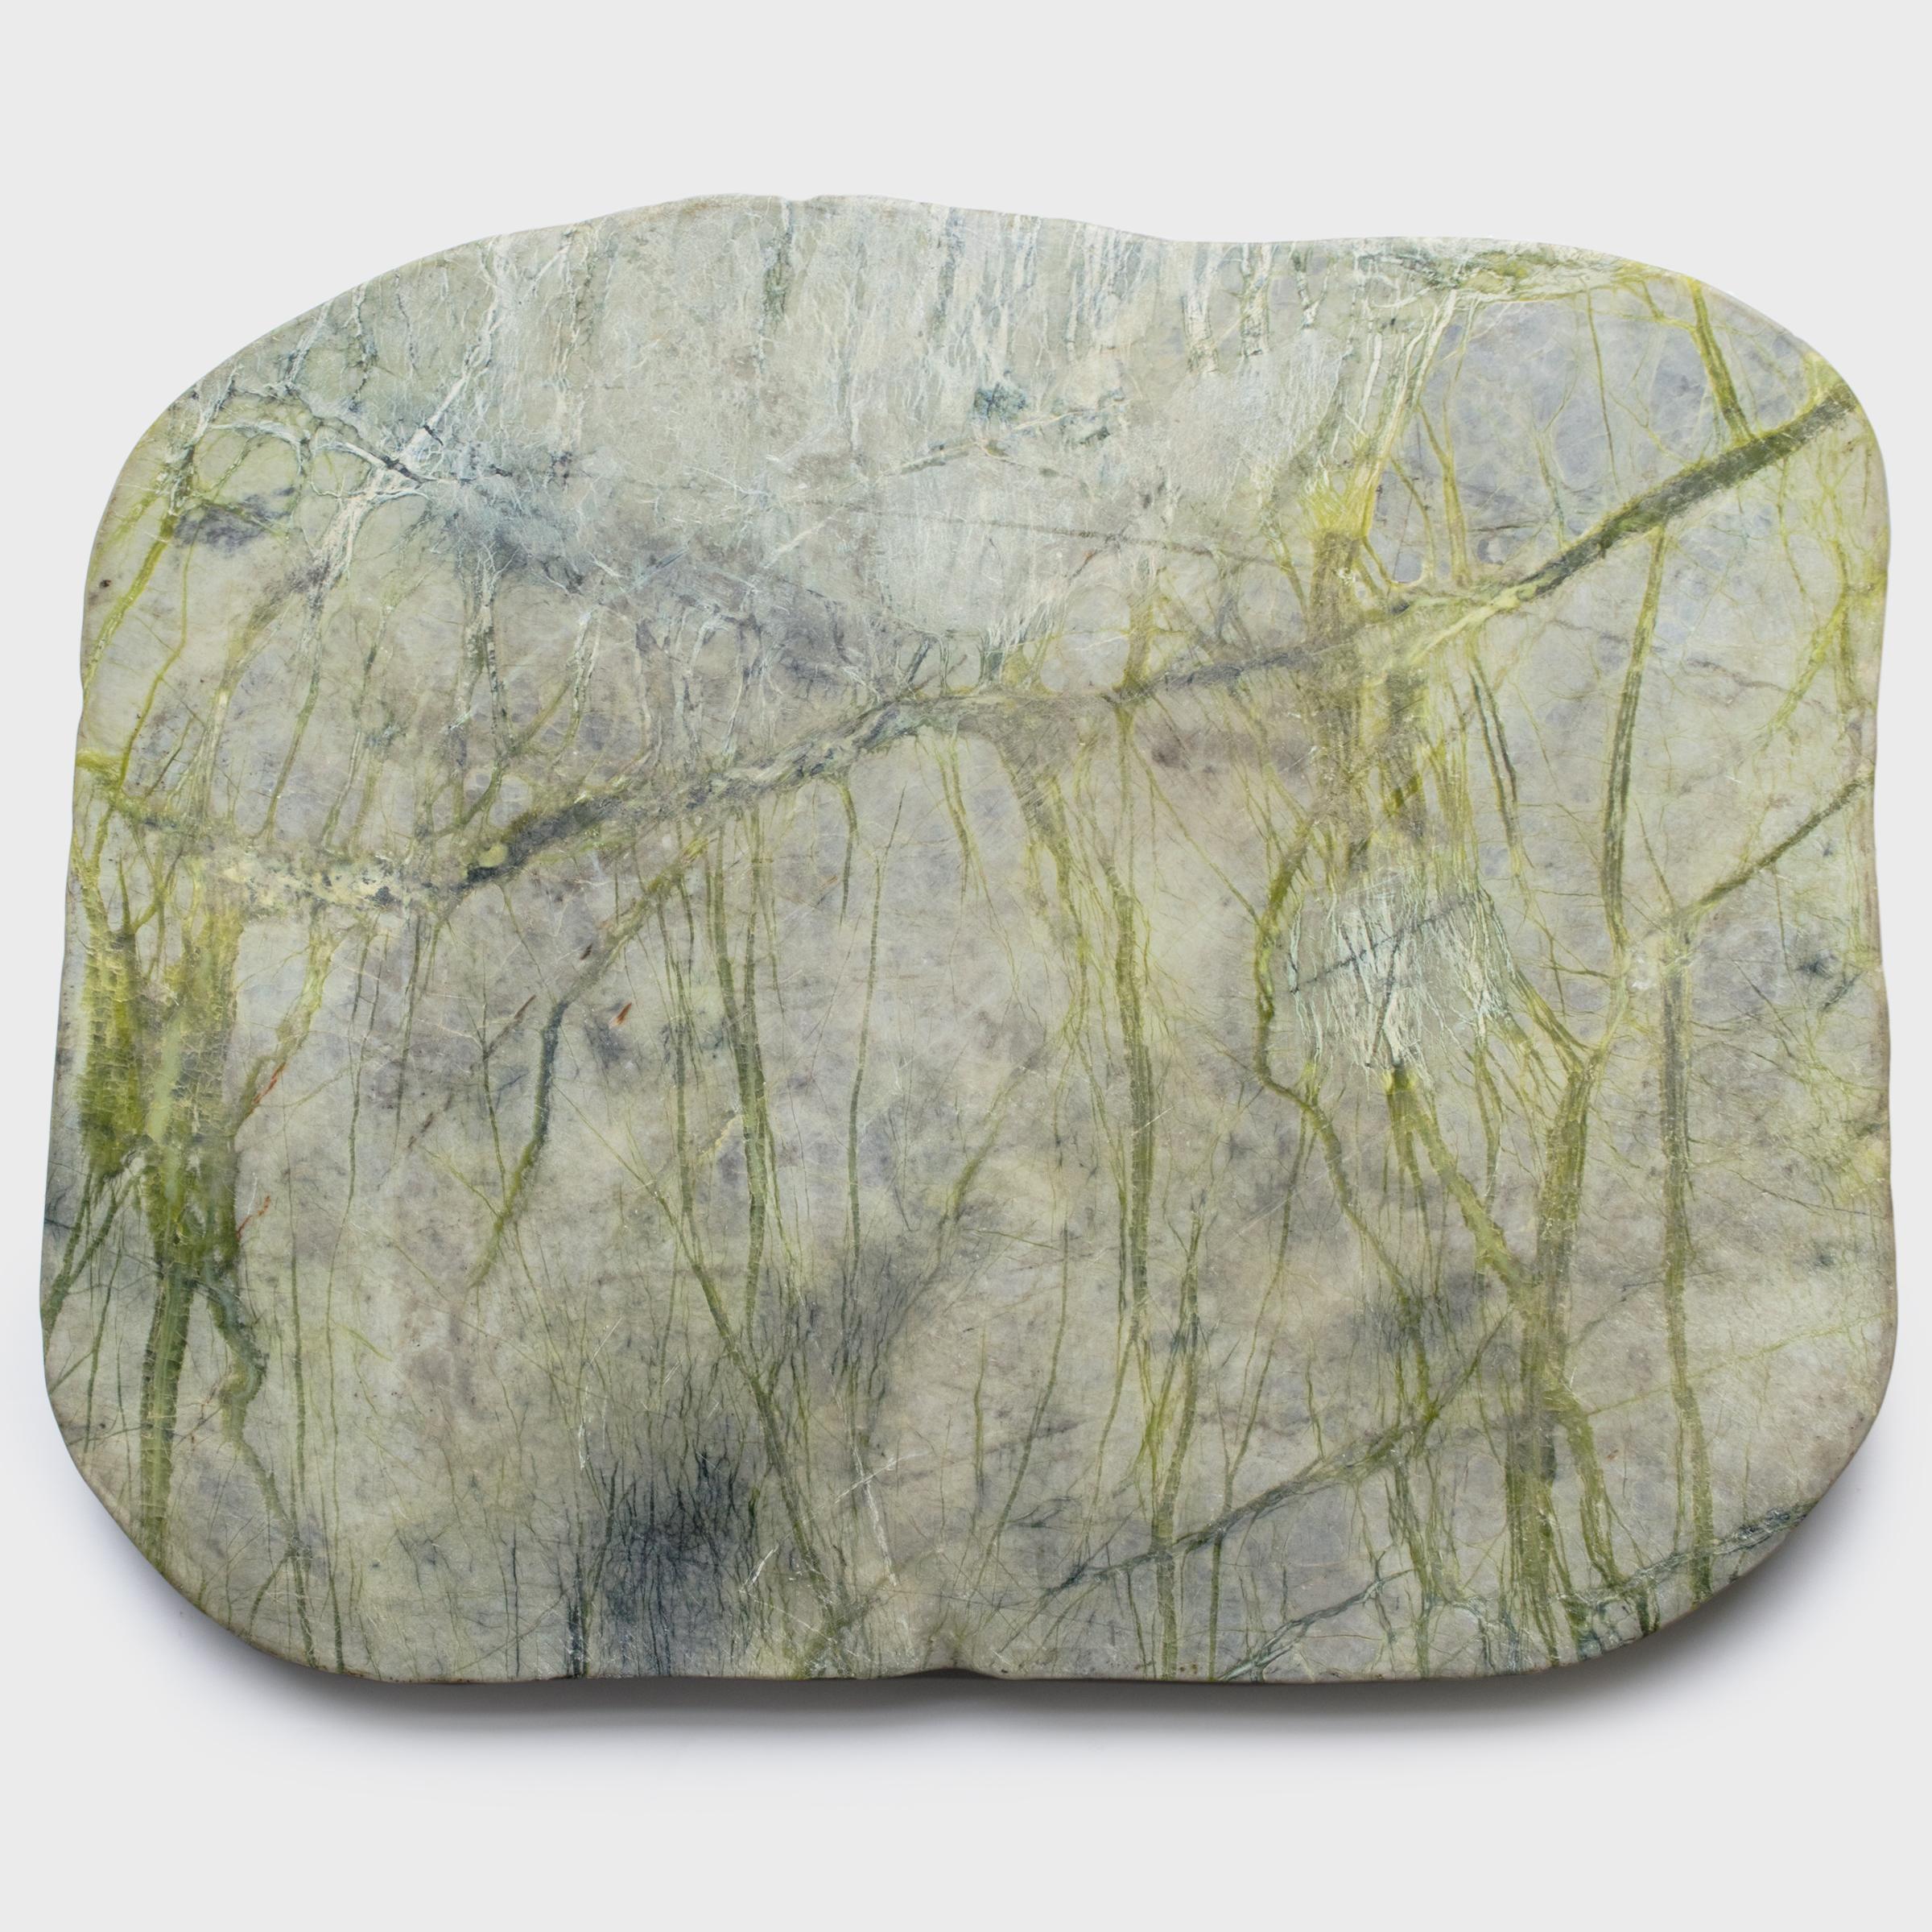 Chinese Greenery Meditation Stone Slab